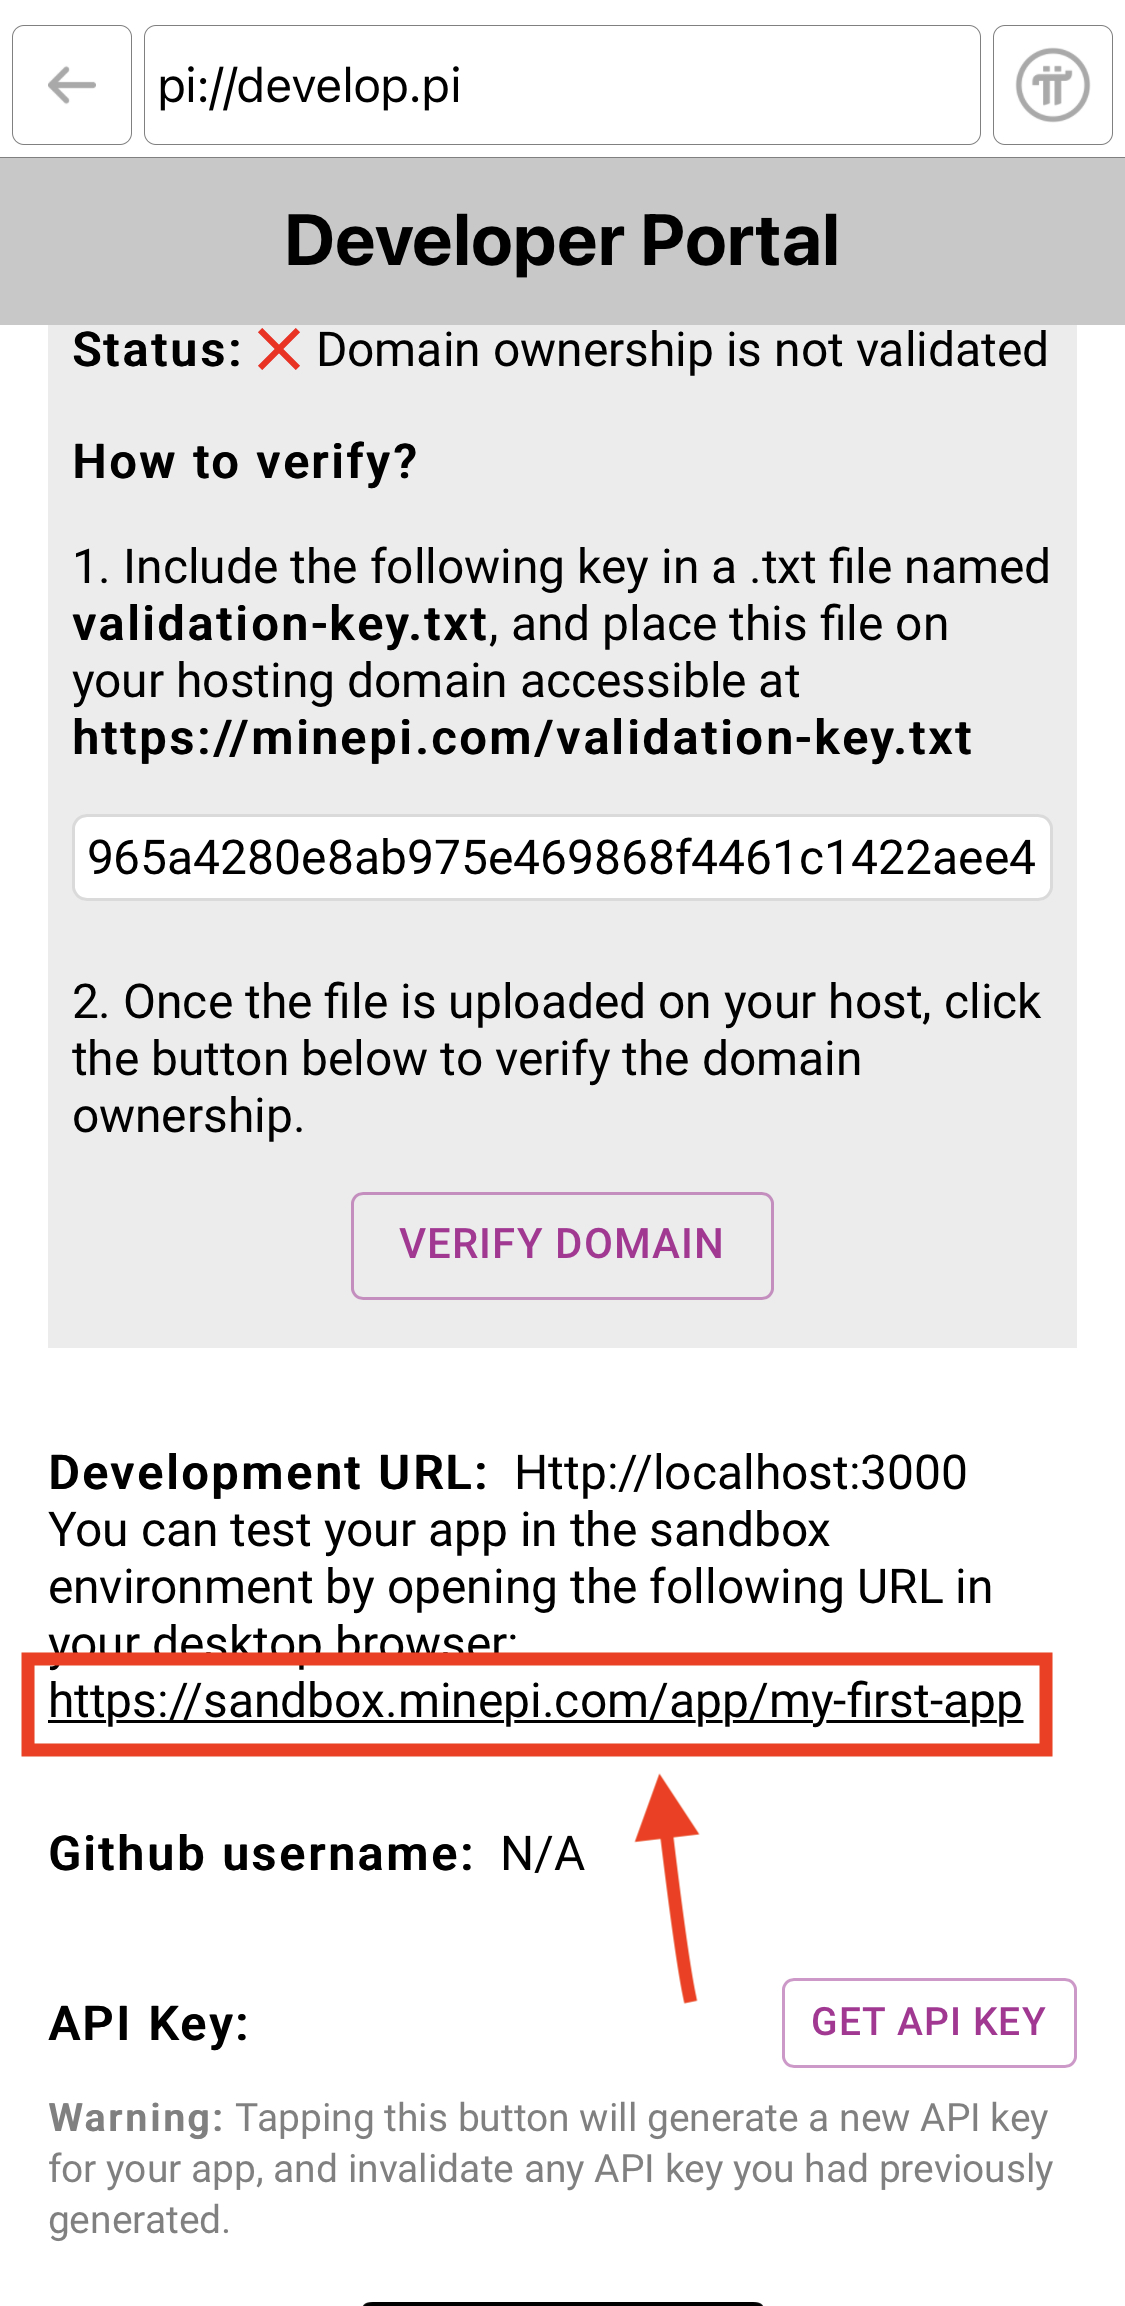 Developer portal project page screenshot showing the sandbox URL